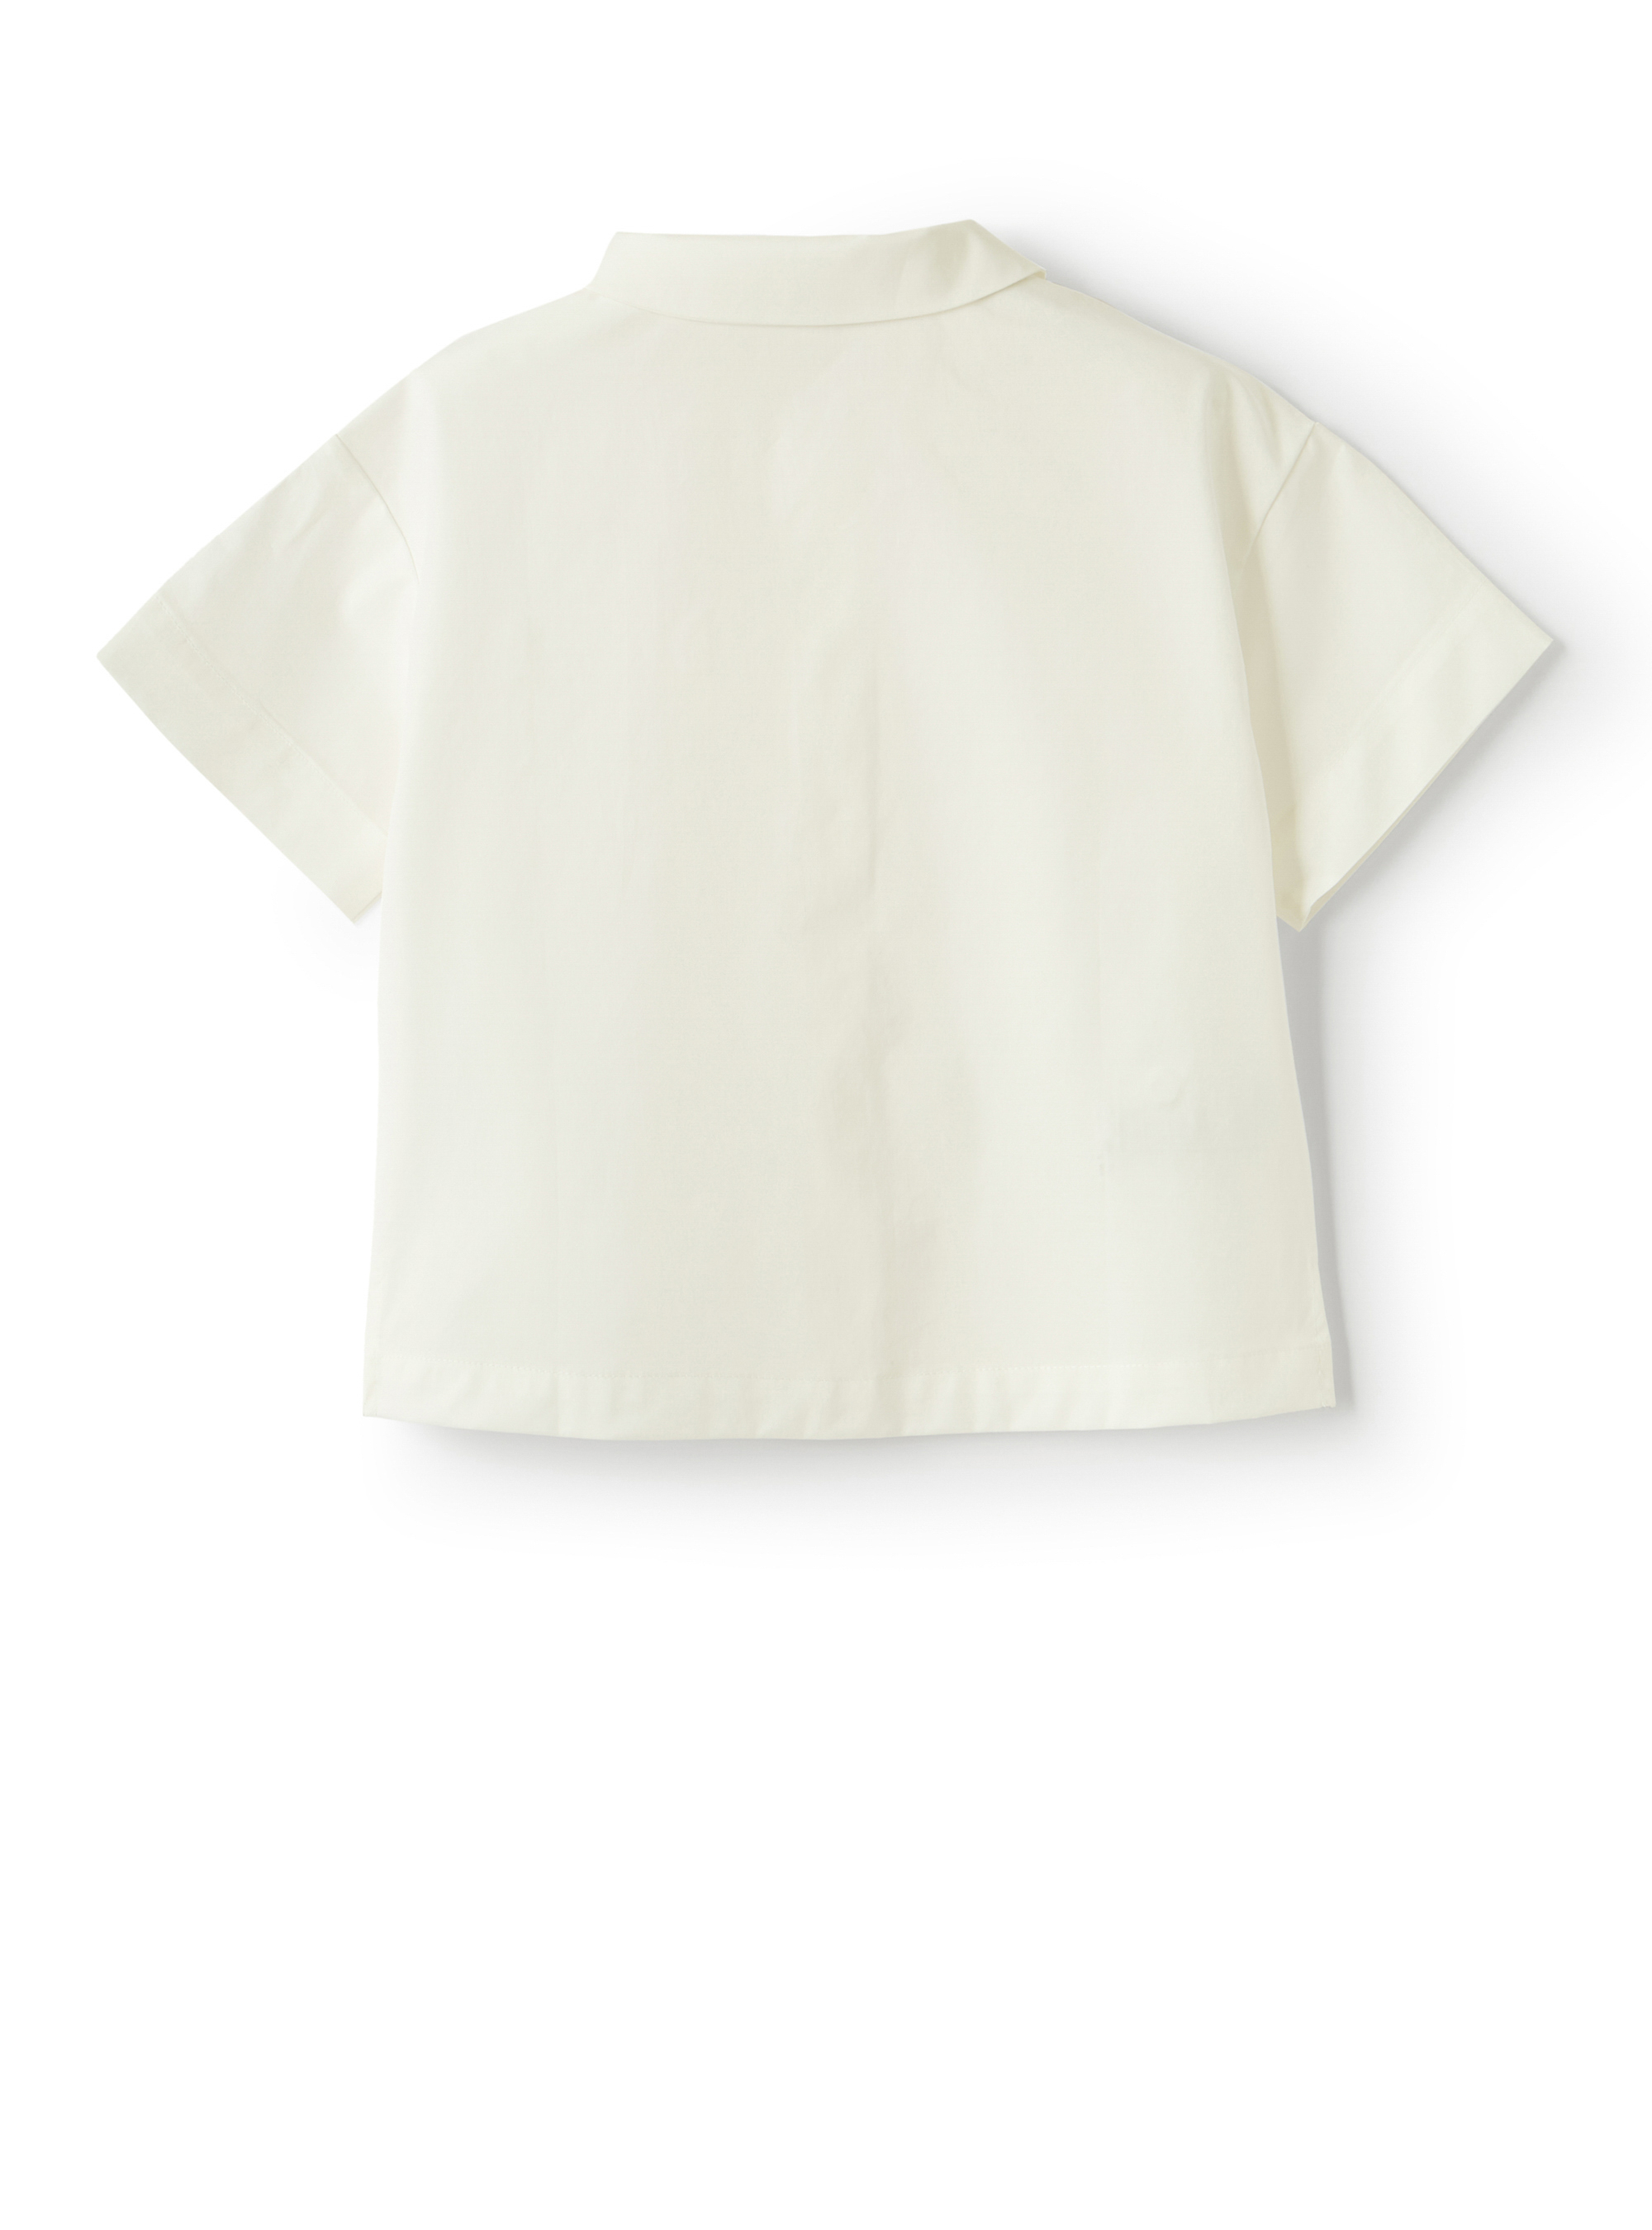 White cotton shirt with breast pocket - White | Il Gufo